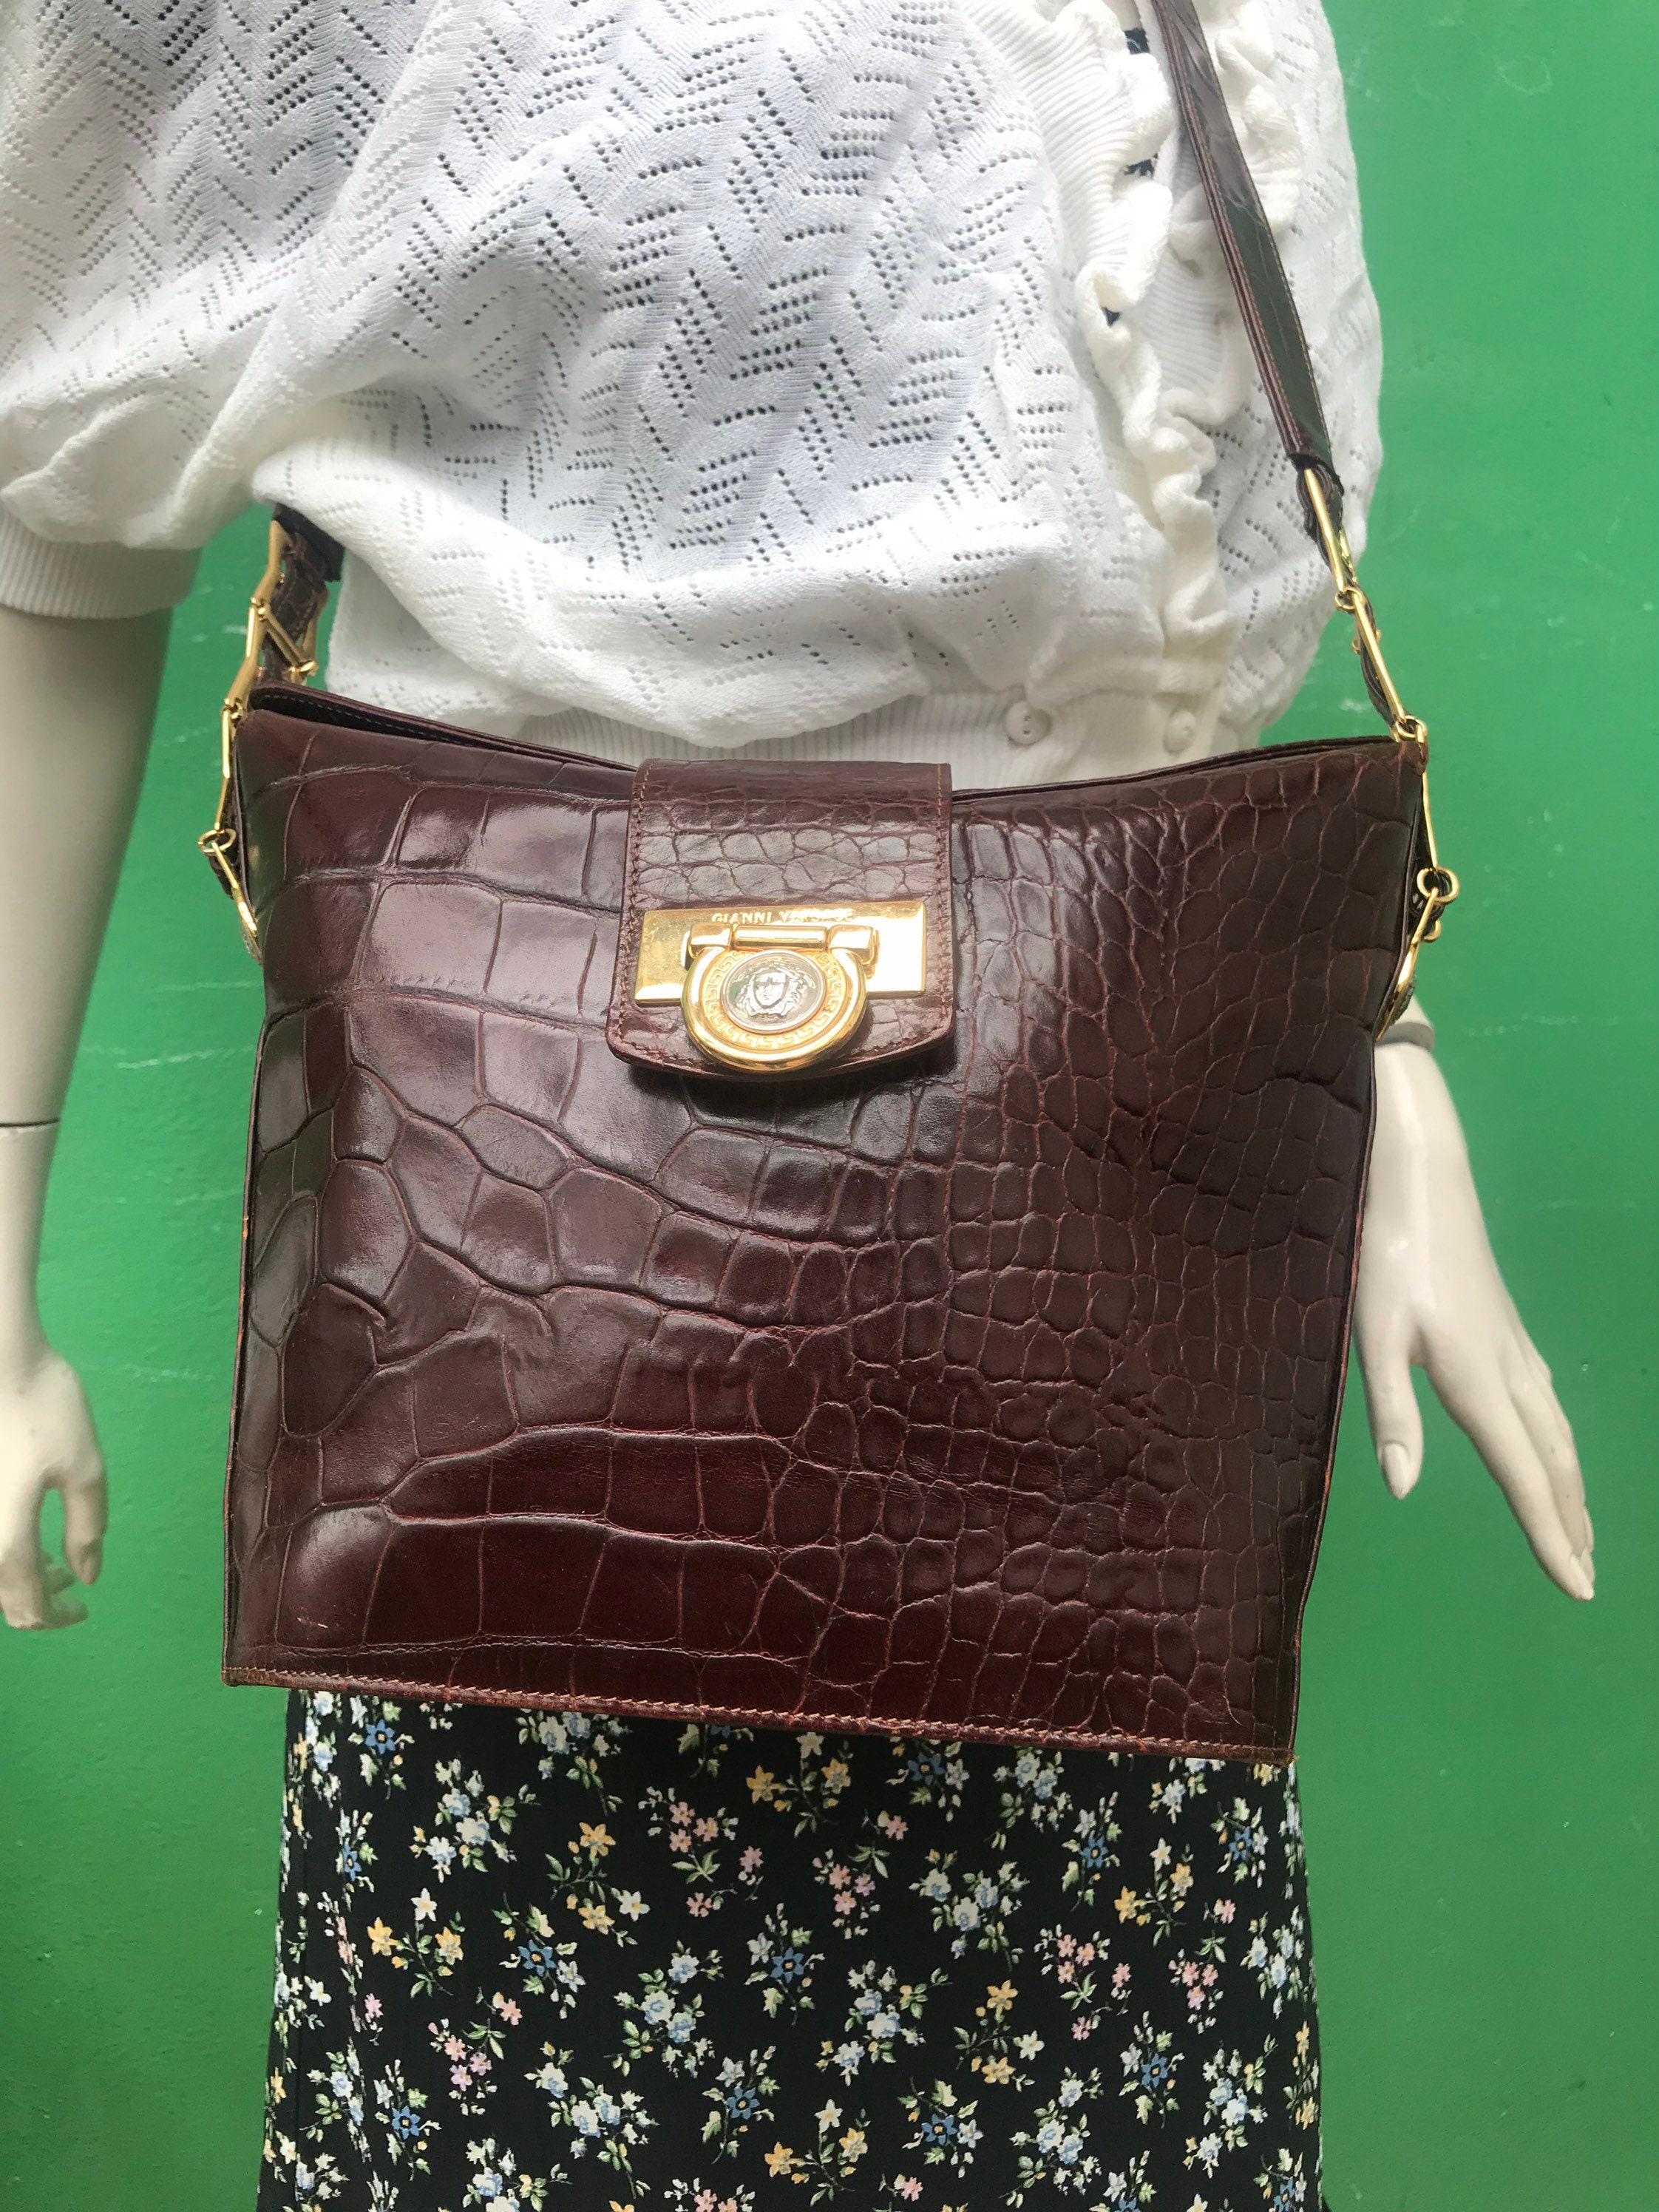 Vintage Gianni Versace bag? Is this authentic ? : r/VintageFashion